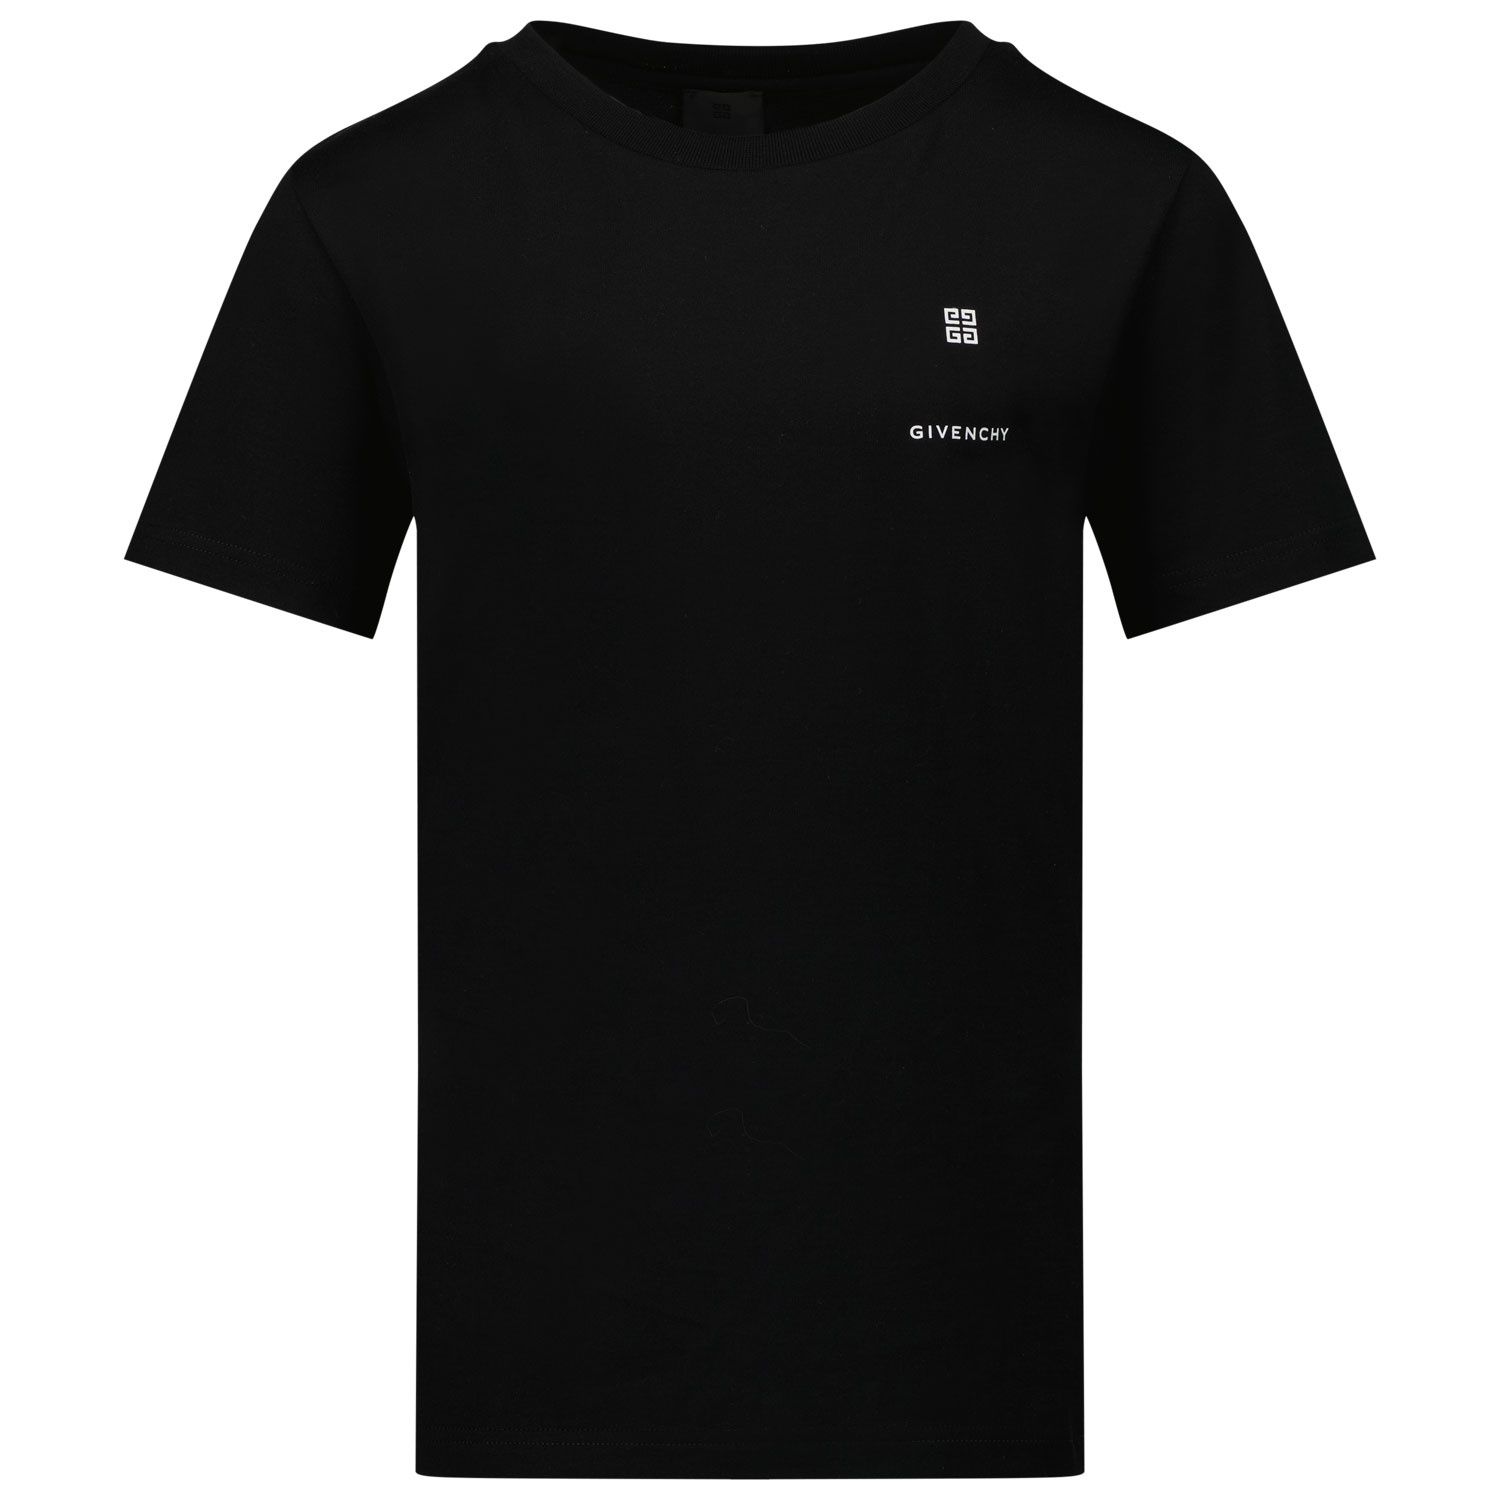 Afbeelding van Givenchy H25340 kinder t-shirt zwart